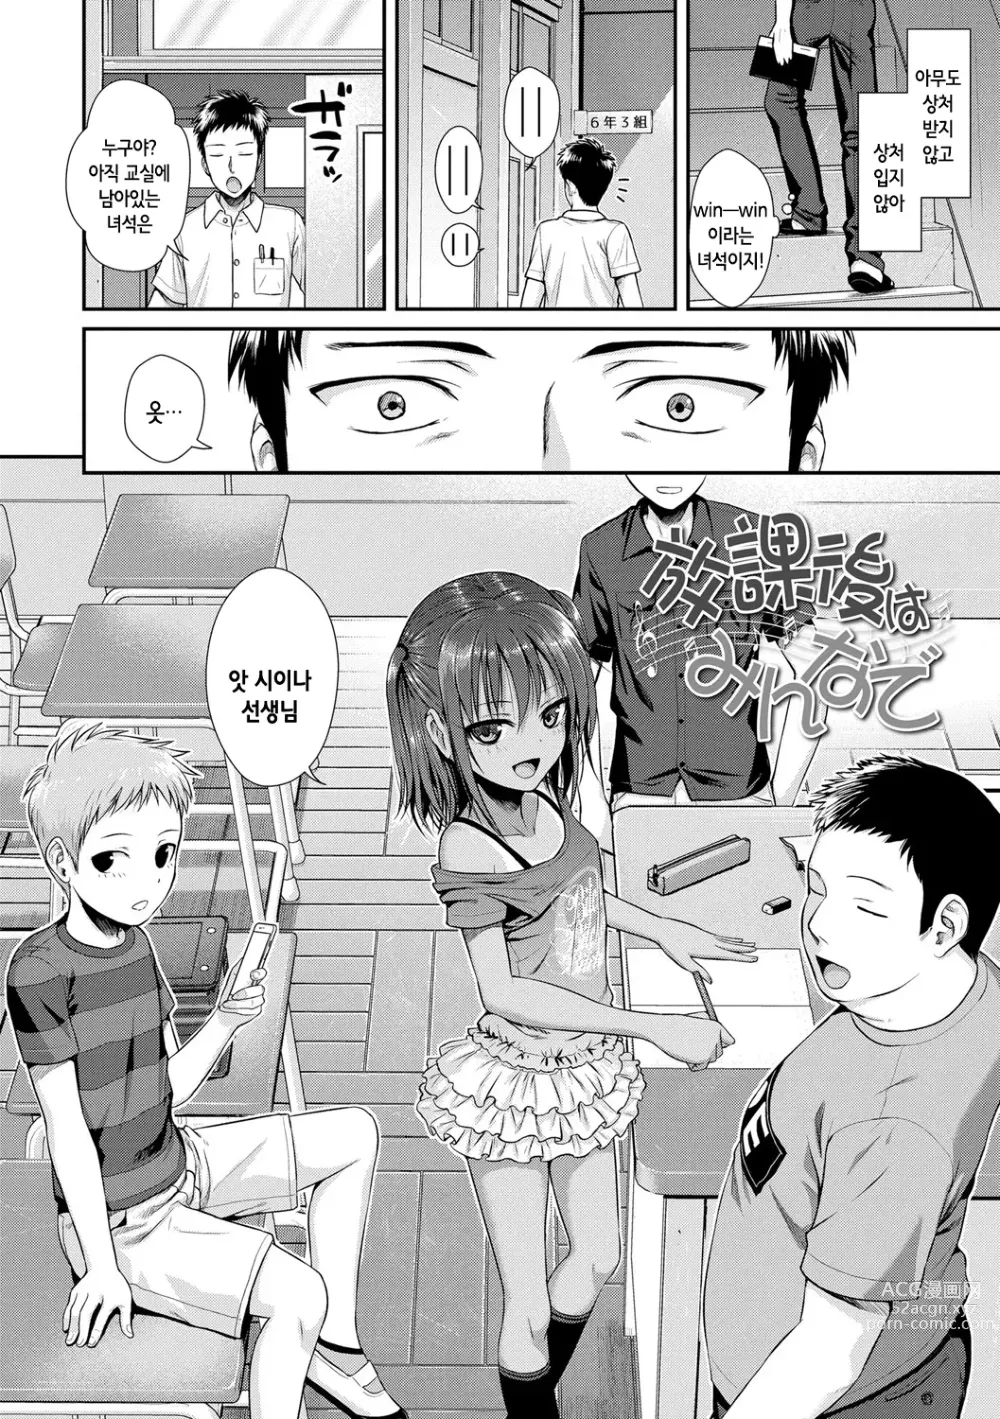 Page 8 of manga 프로토타입 로리타 + 토라노아나 구입 특전 4P 리플렛 휴일은 아저씨와 (decensored)